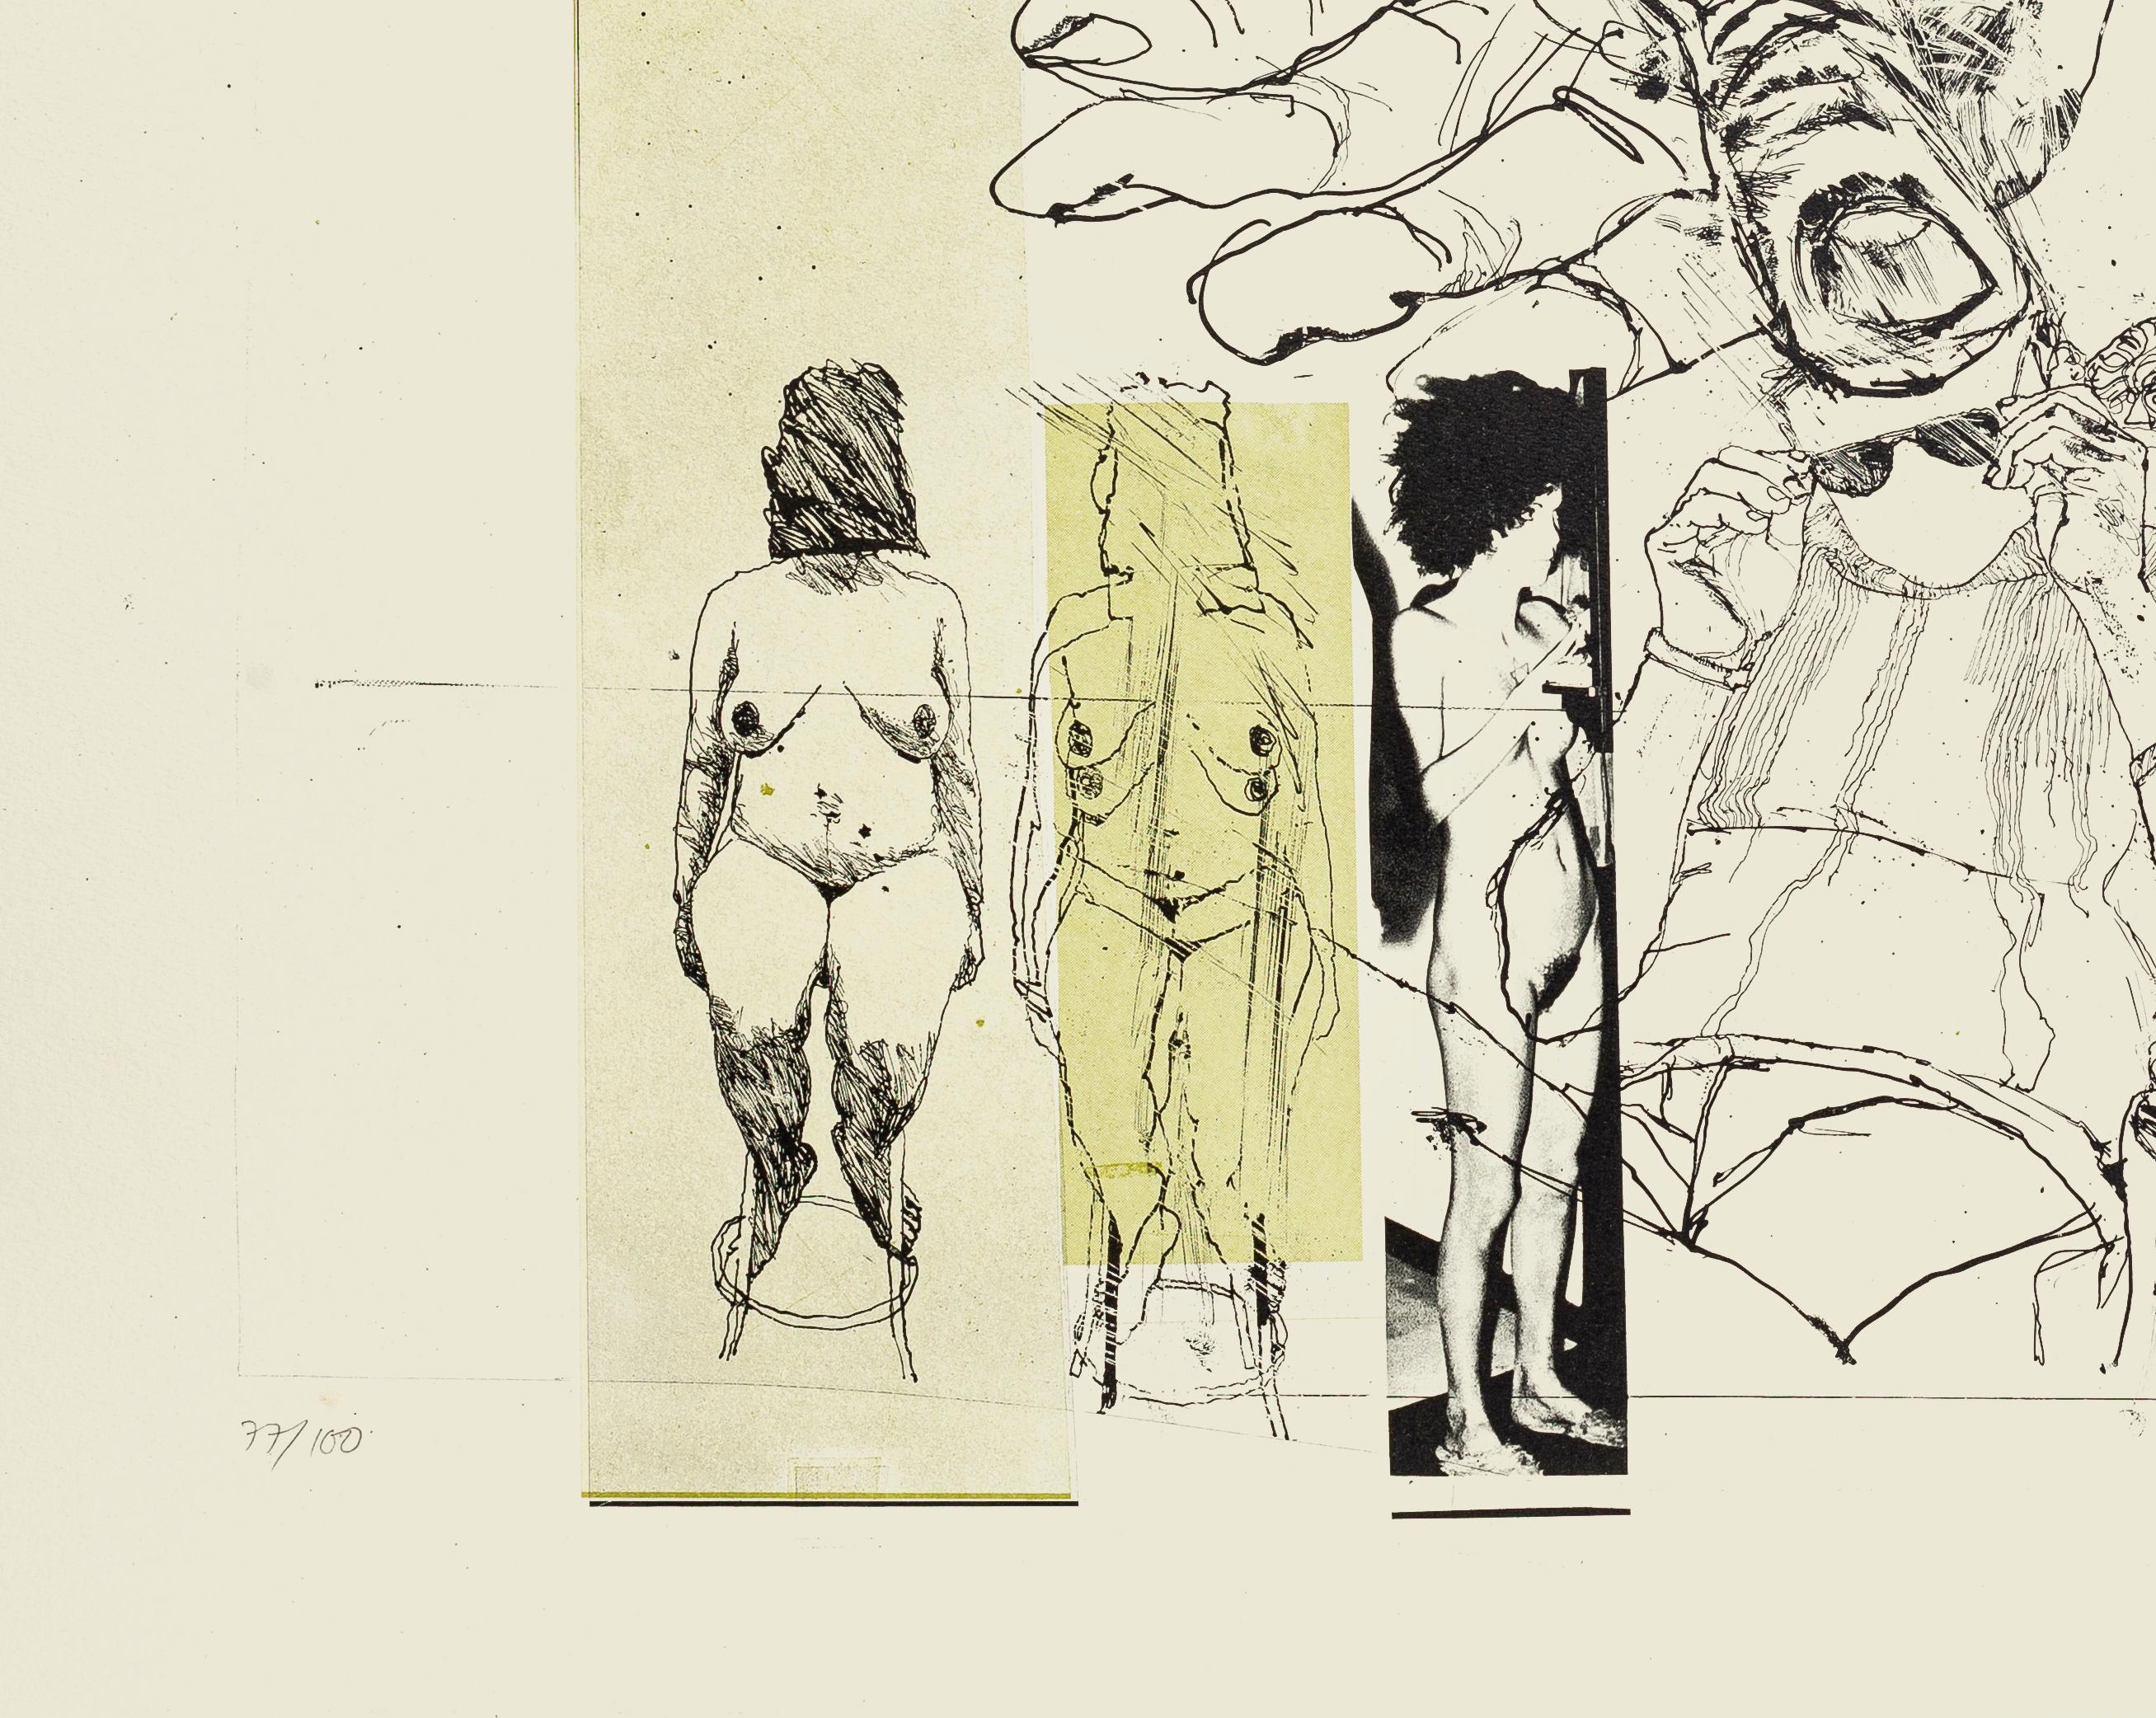 Nude and Hand - Original Lithograph by Sergi Barletta - 1970s - Contemporary Print by Sergio Barletta